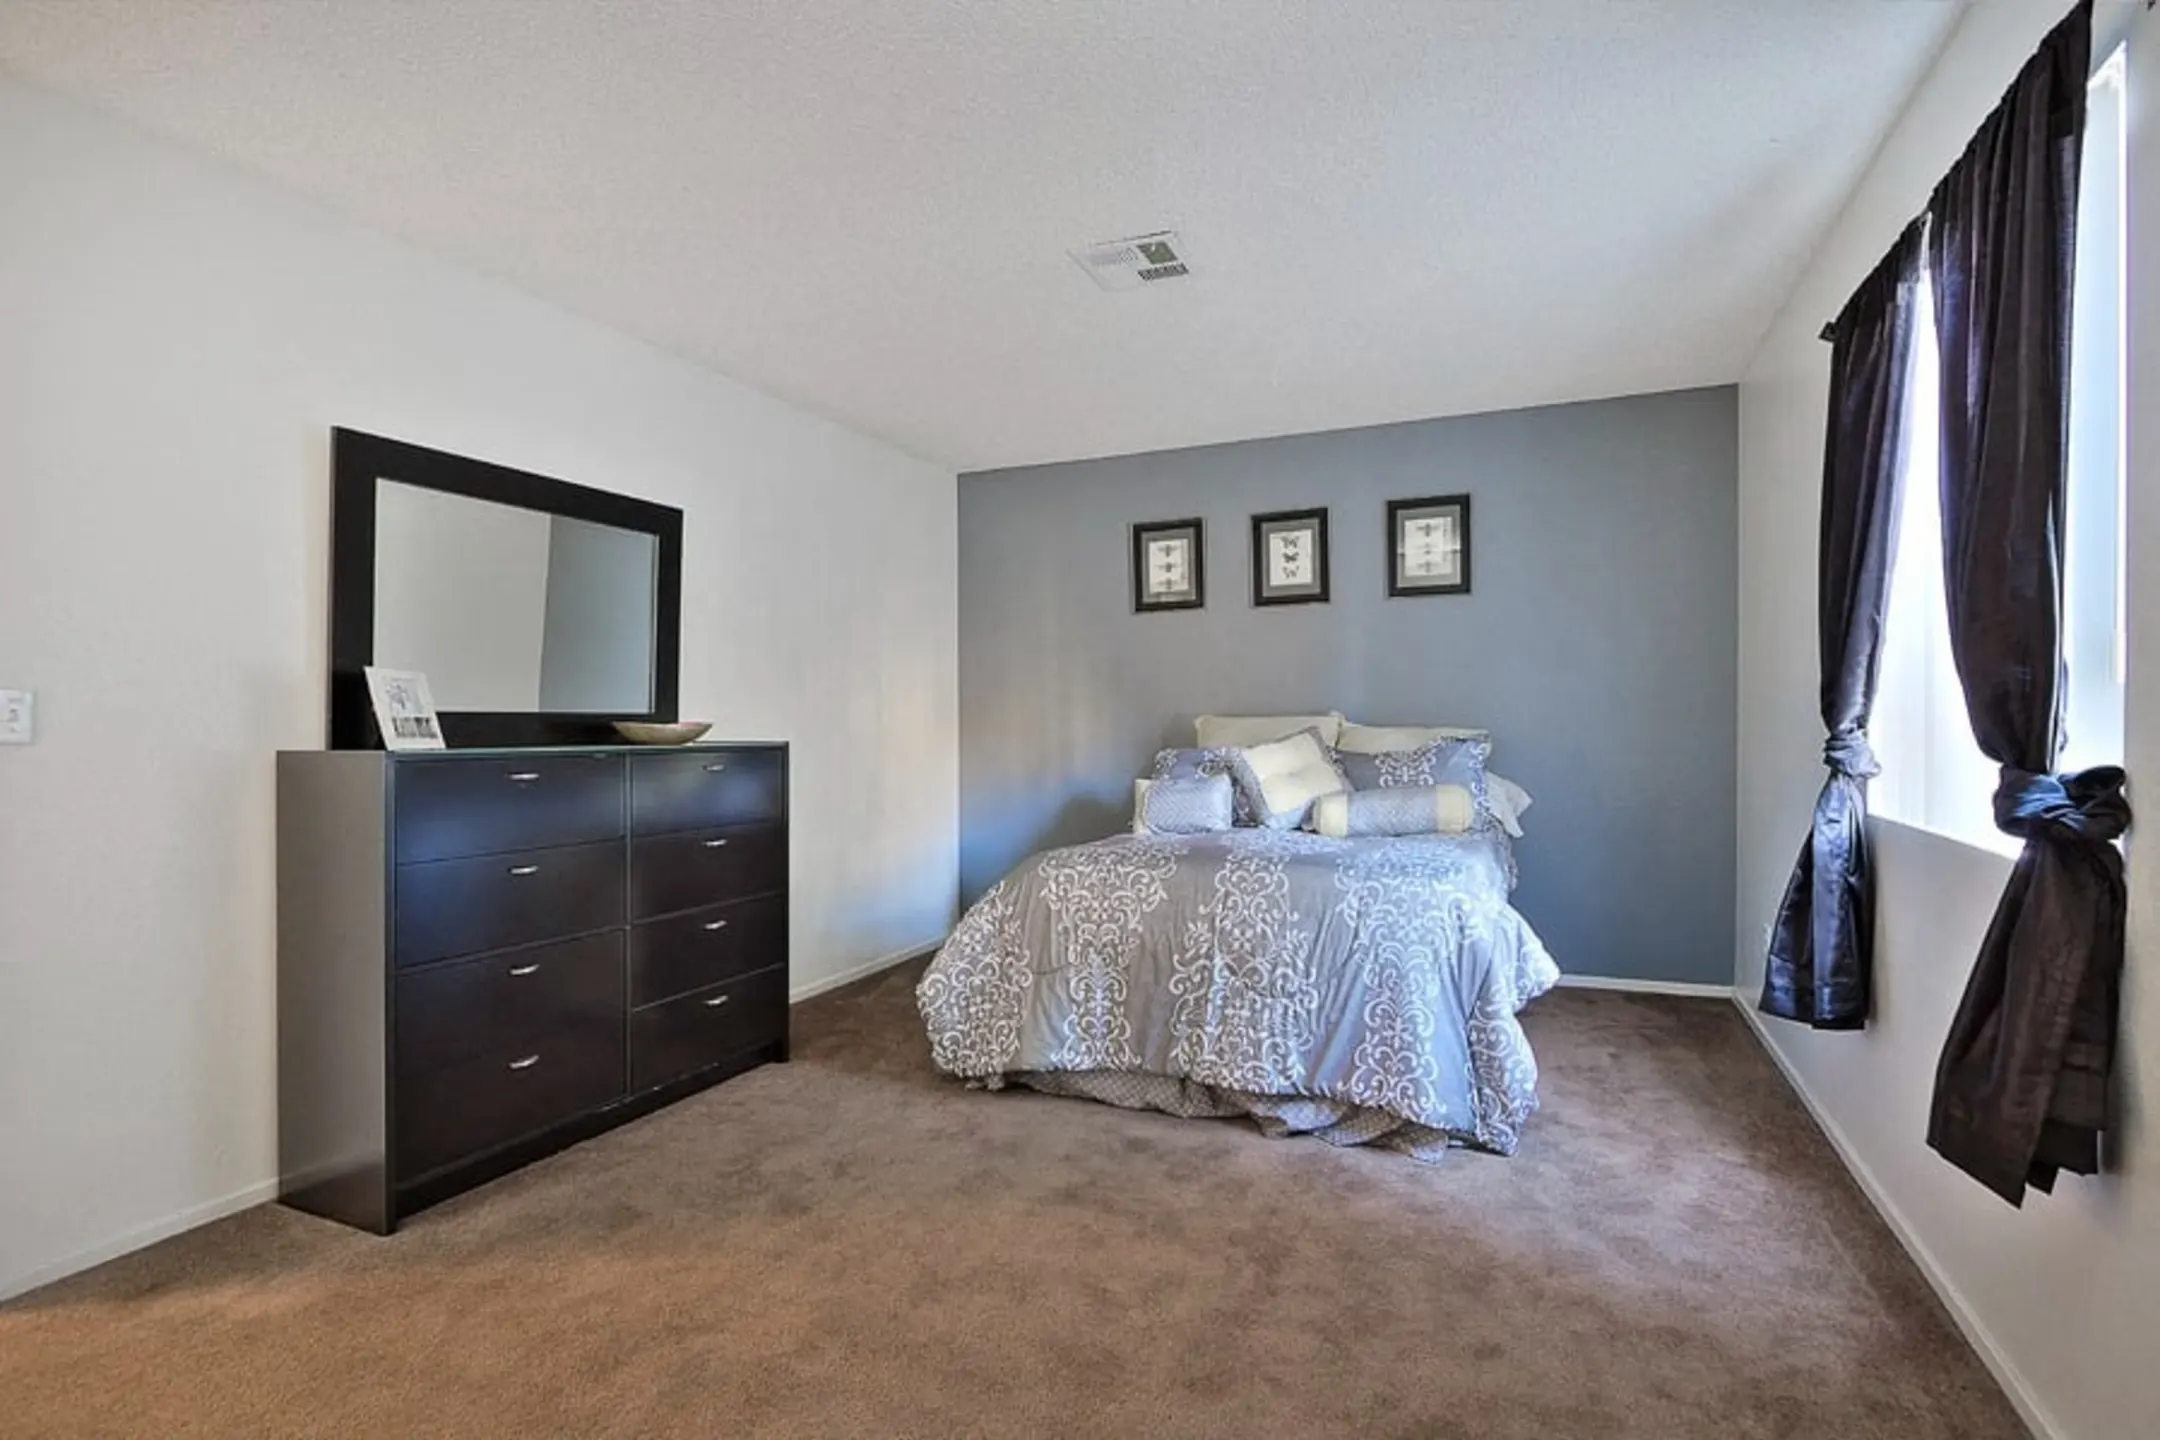 Bedroom - Mirabella - Las Vegas, NV